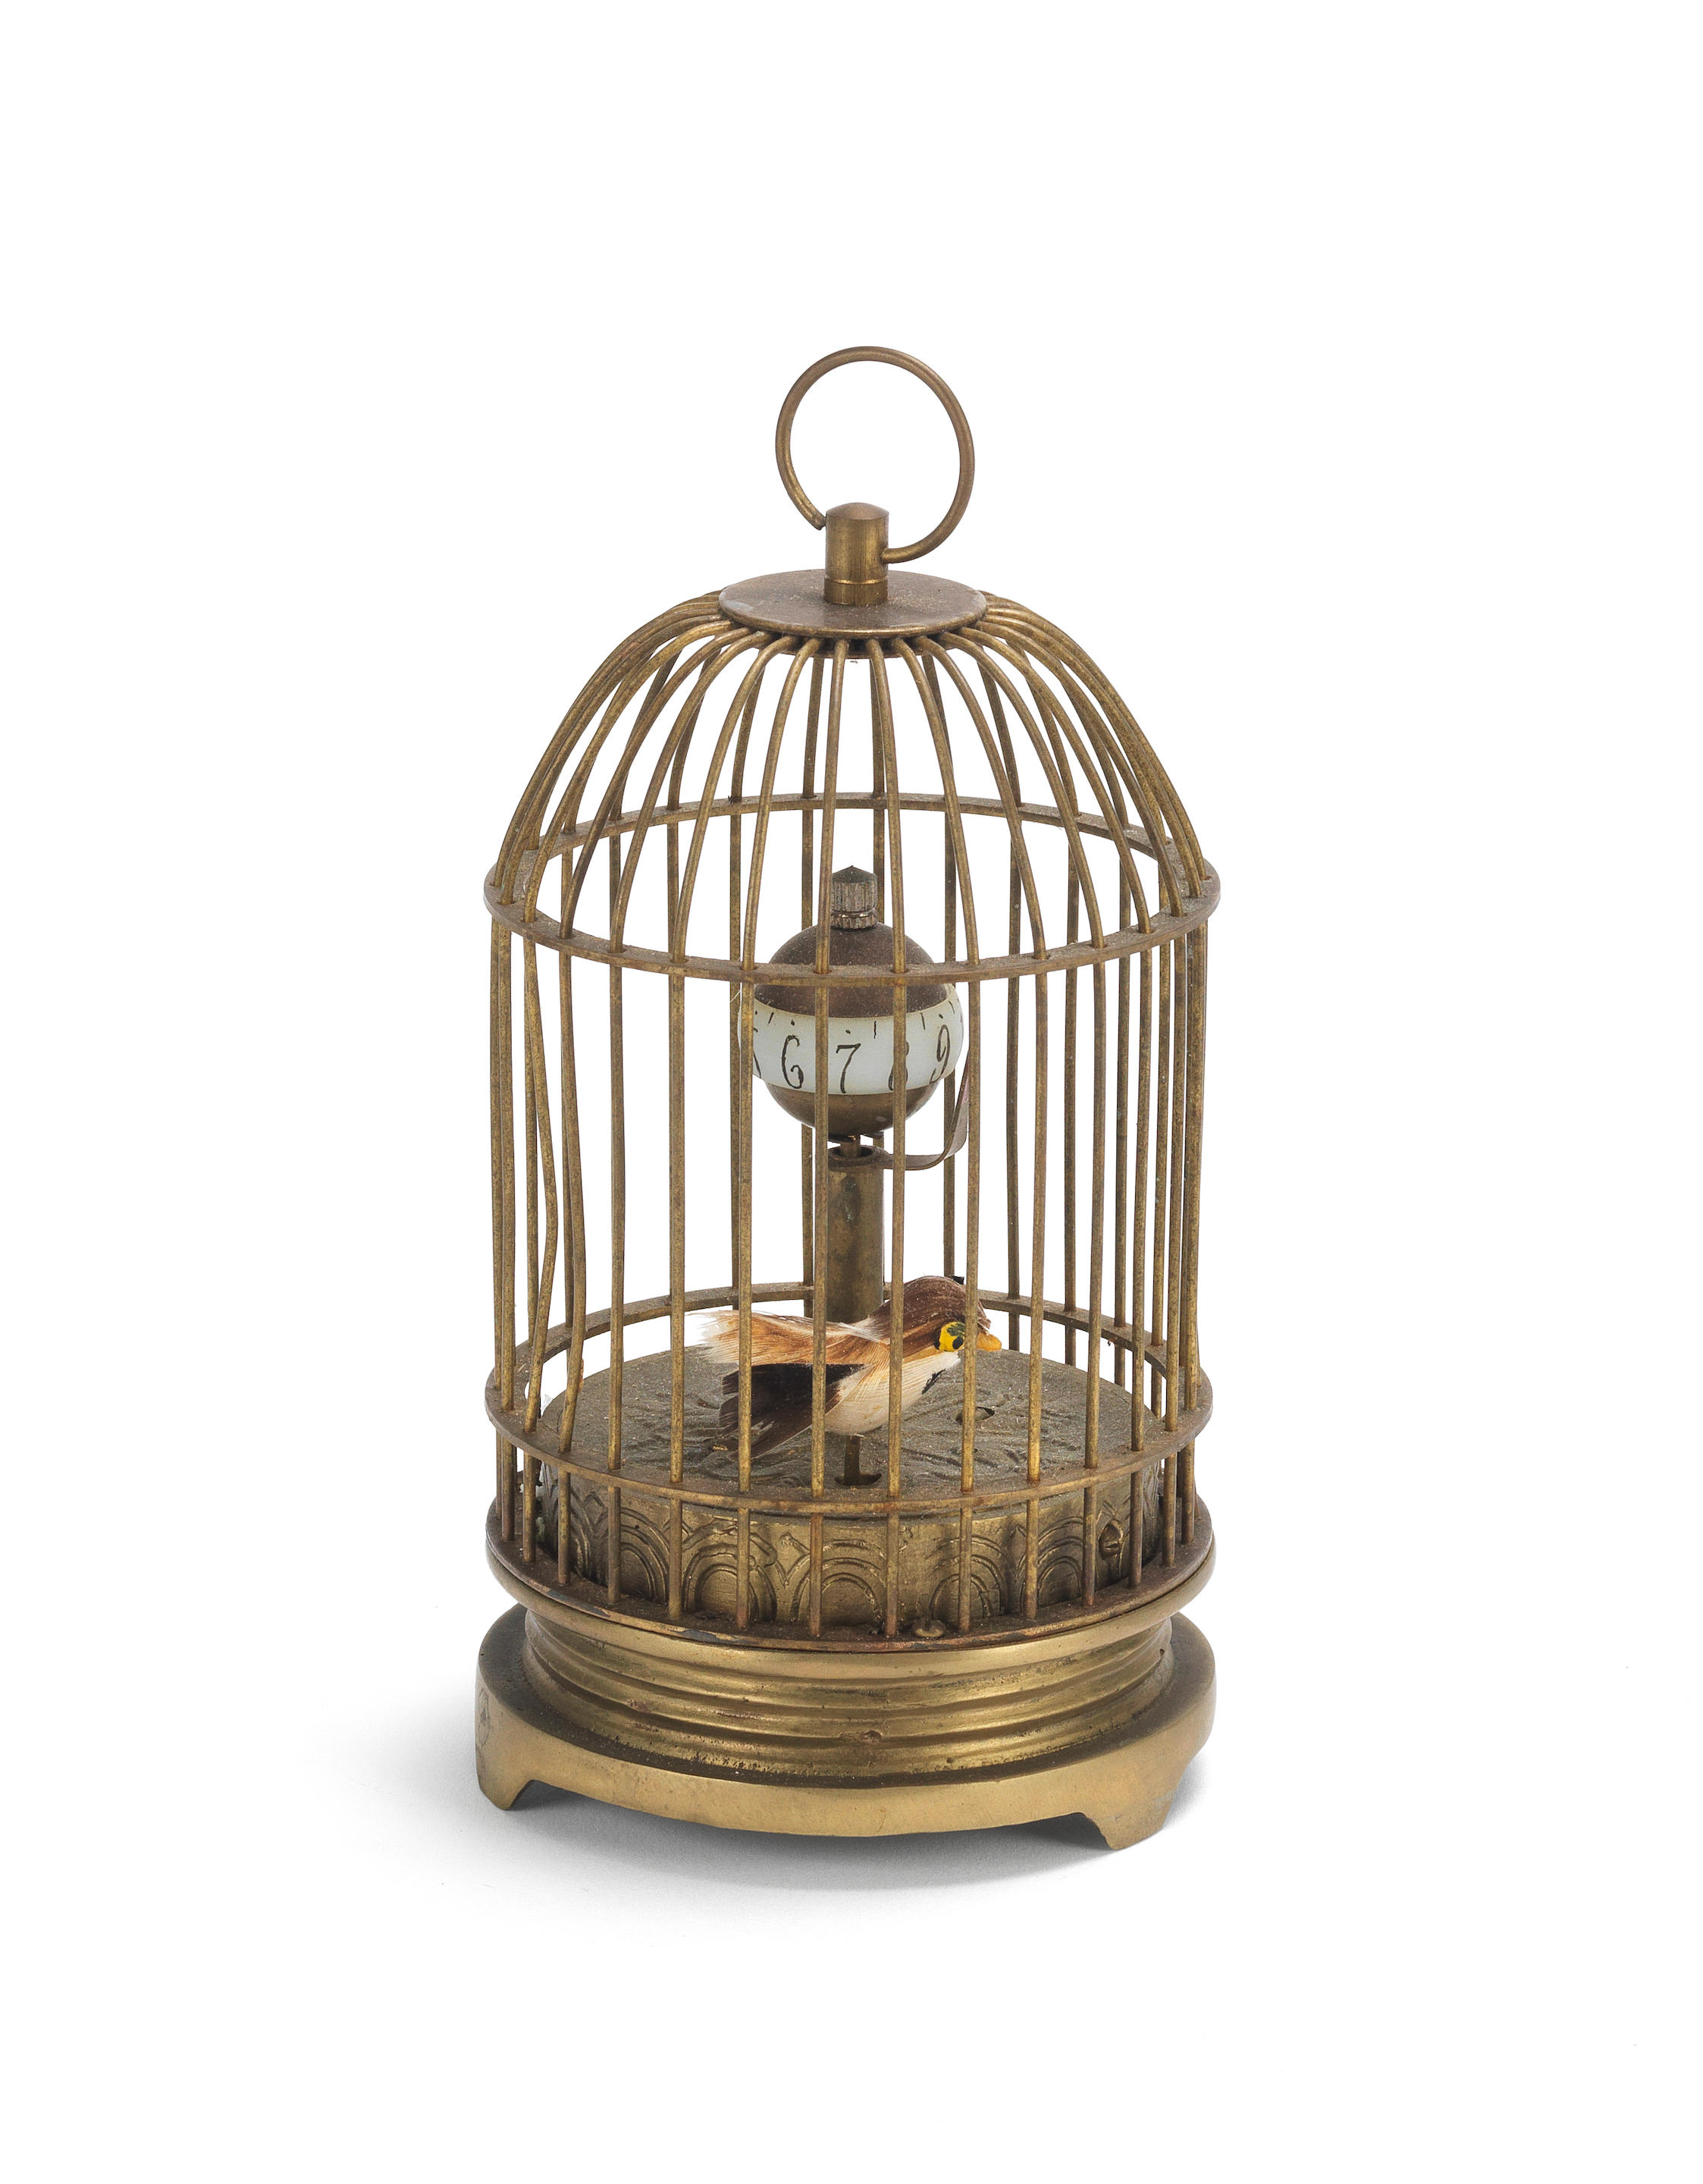 Bonhams : A small French early 20th century brass bird cage automaton clock